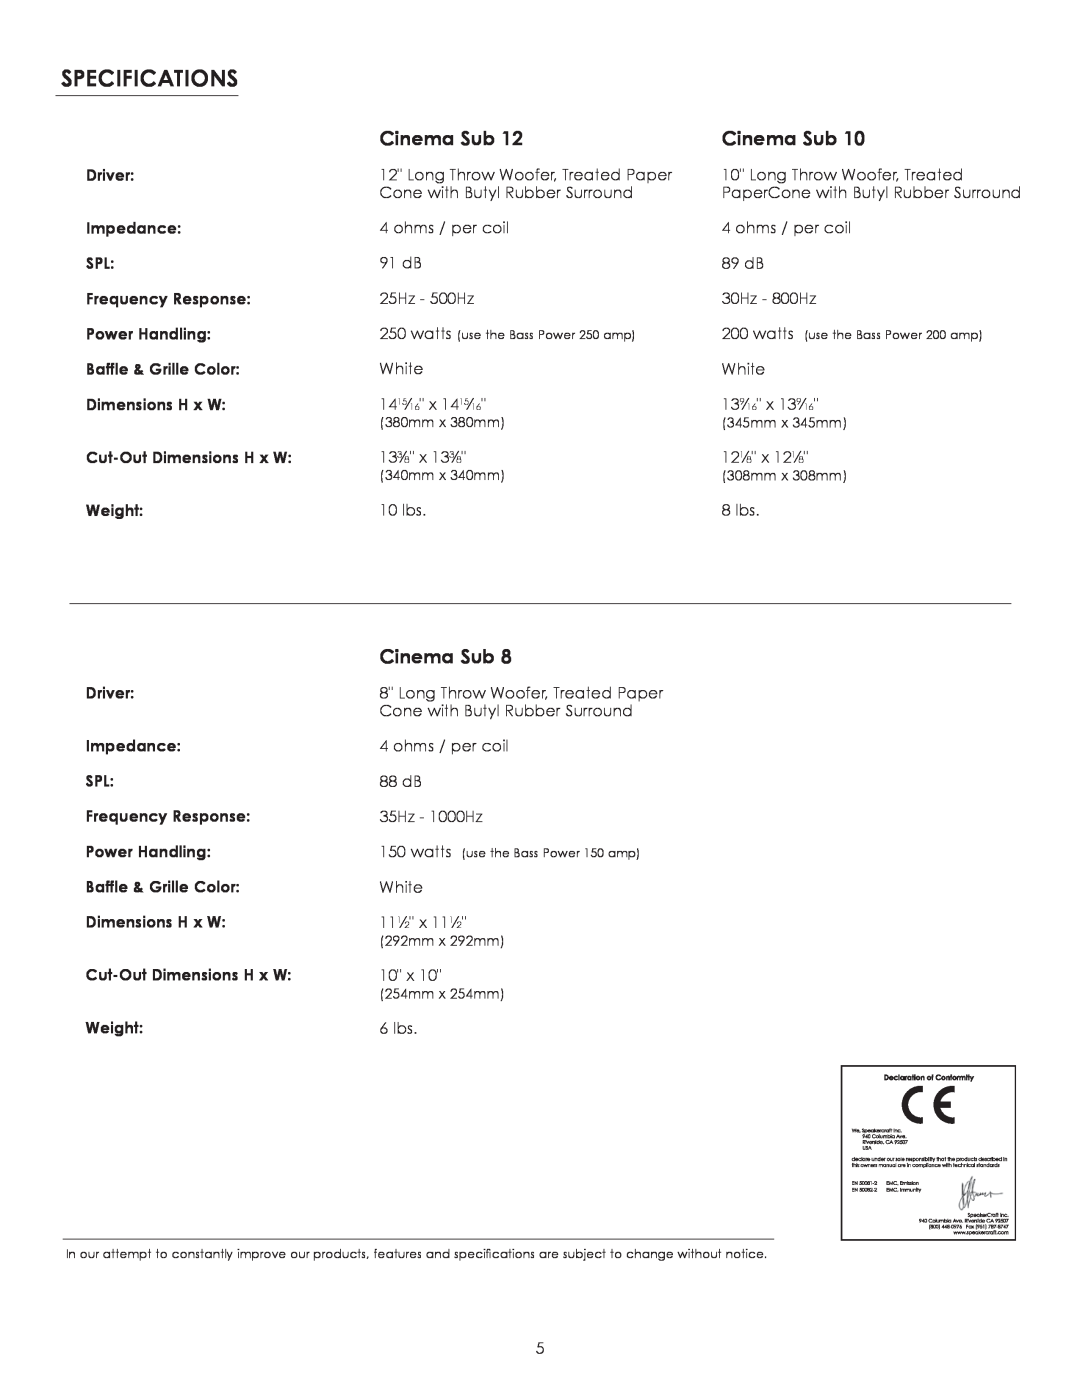 SpeakerCraft CINEMA SUB 8, 10, CINEMA SUB 12 owner manual Specifications, Cinema Sub 